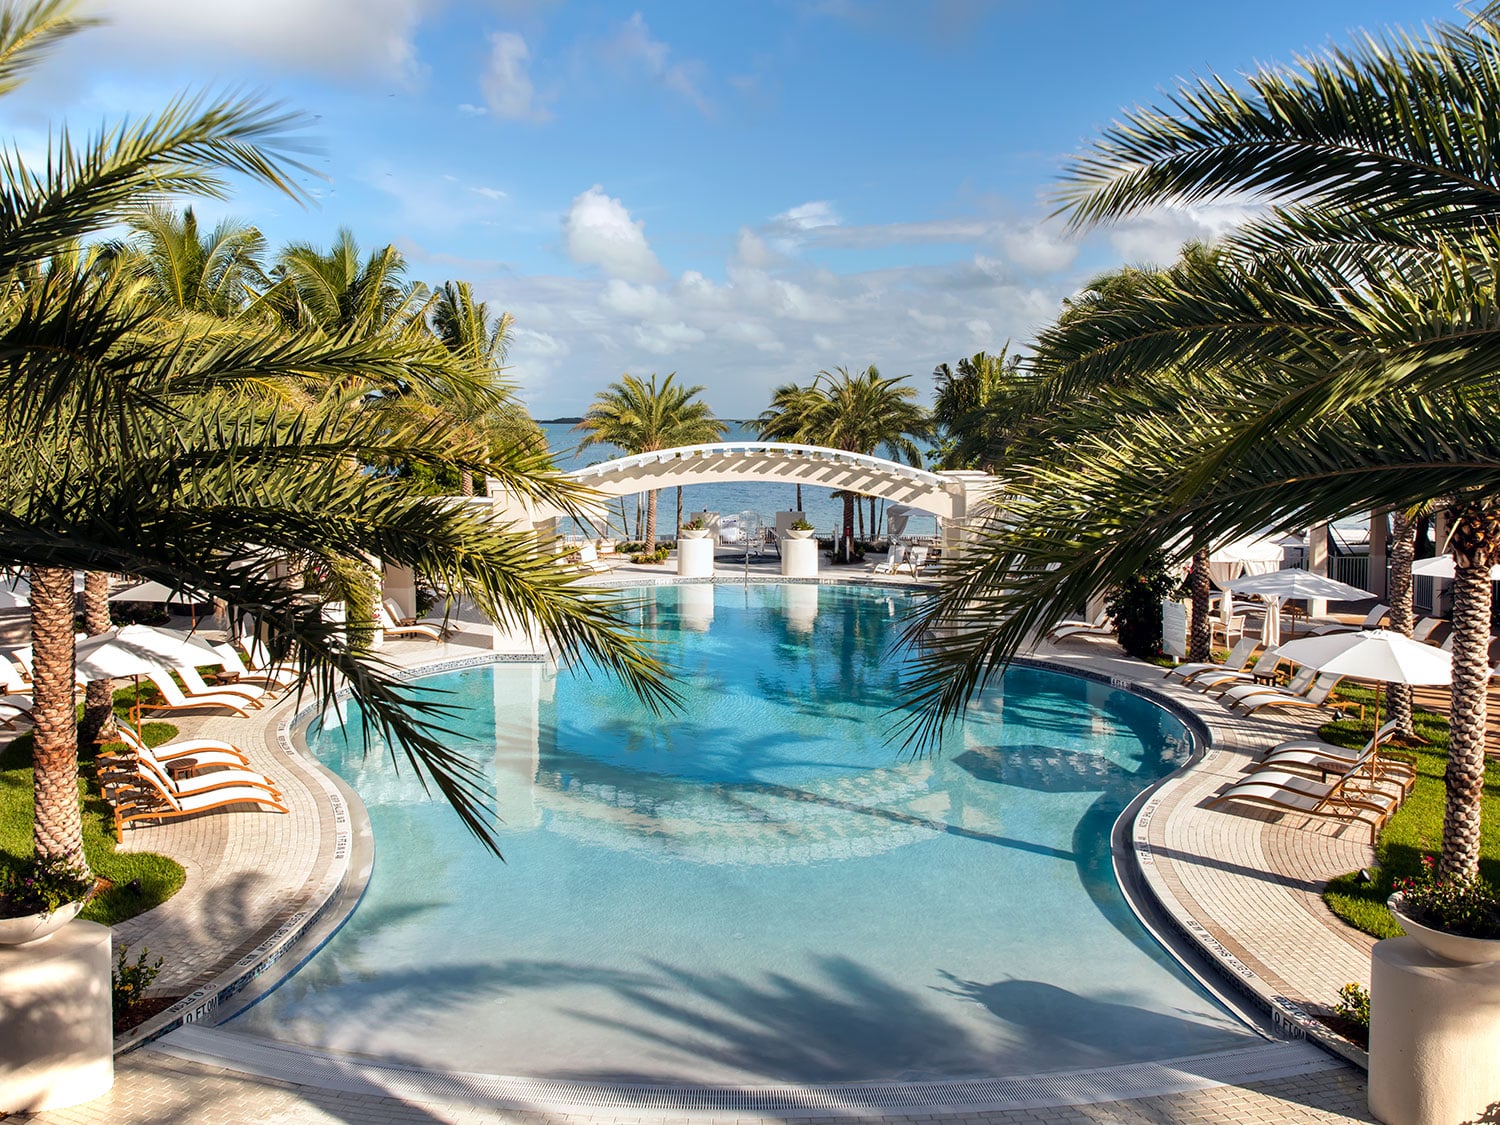 An island beach resort poolside lounge area.